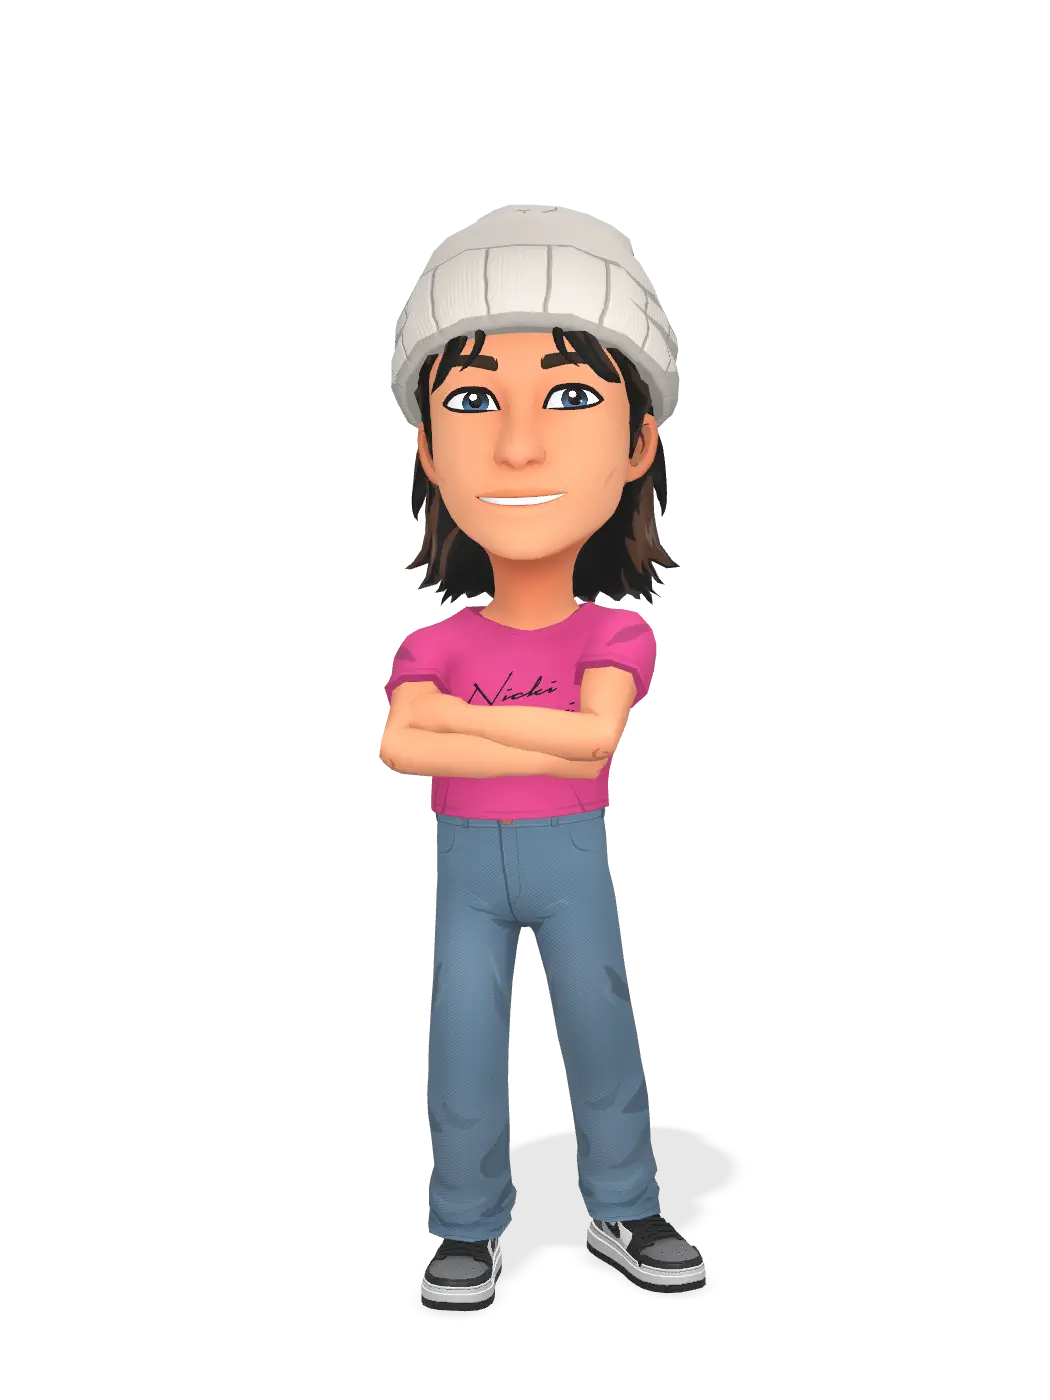 3D Bitmoji for therobmonster05 avatar